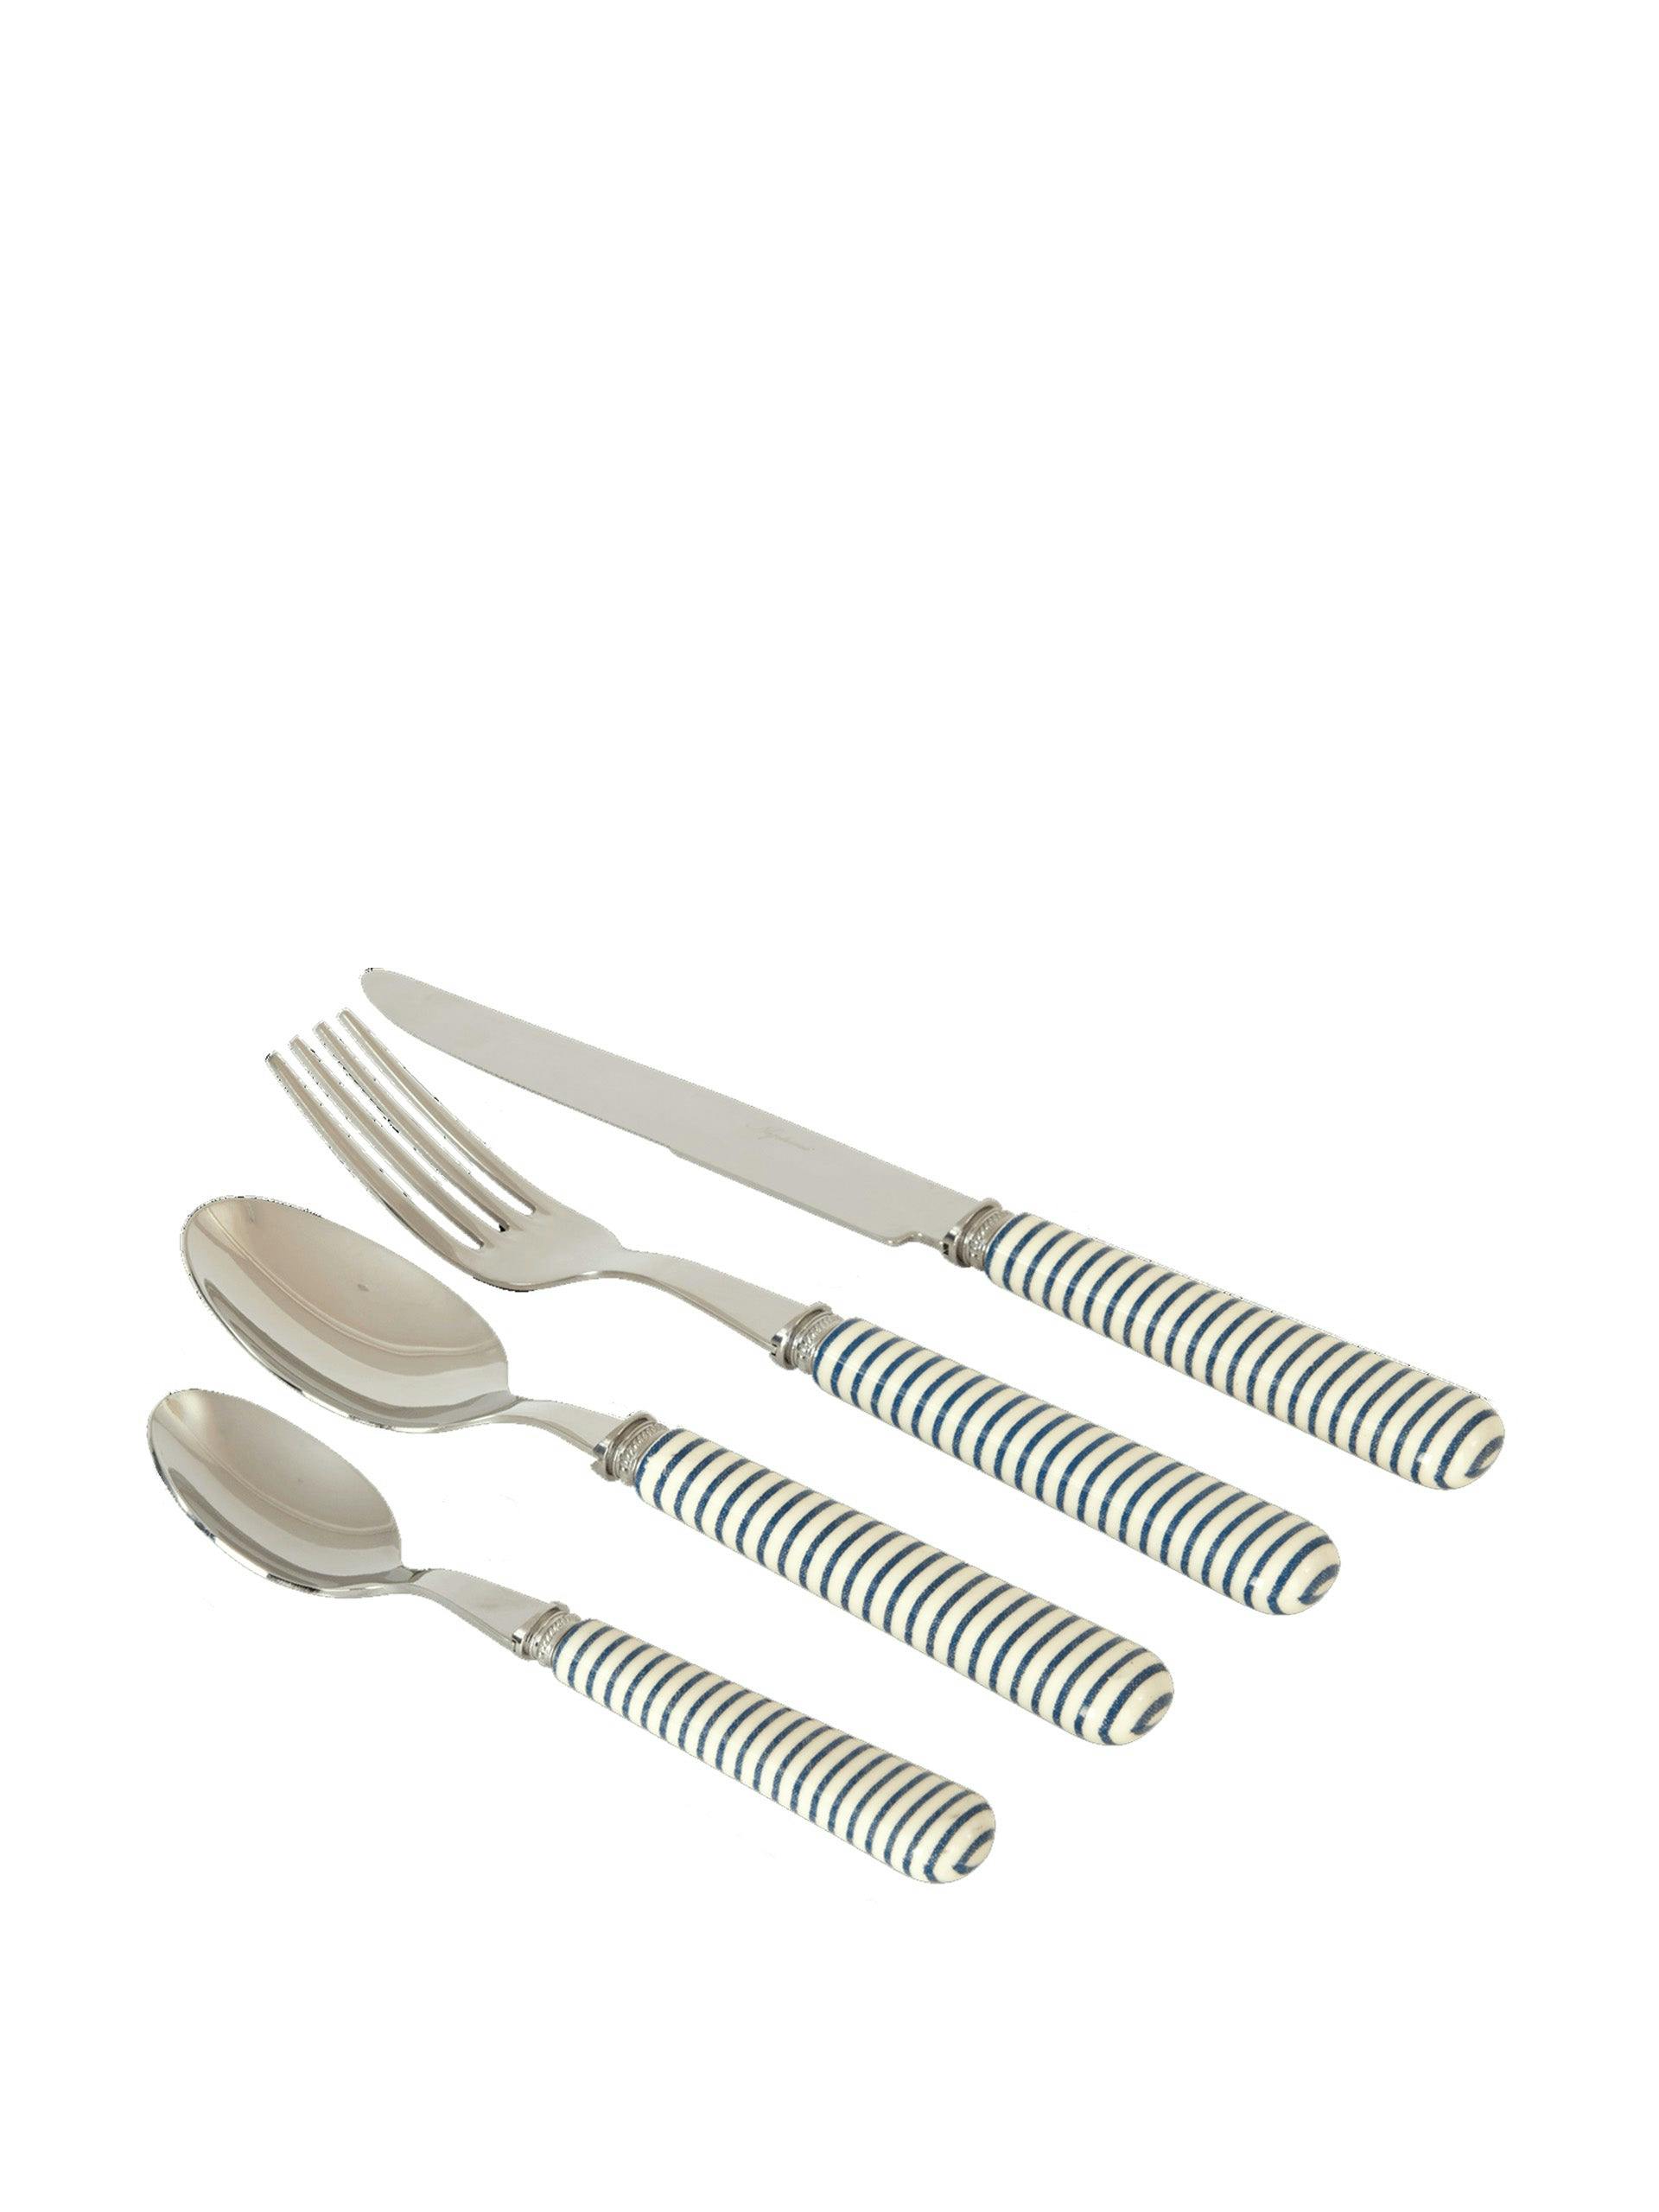 Salcombe cutlery (24-piece set)